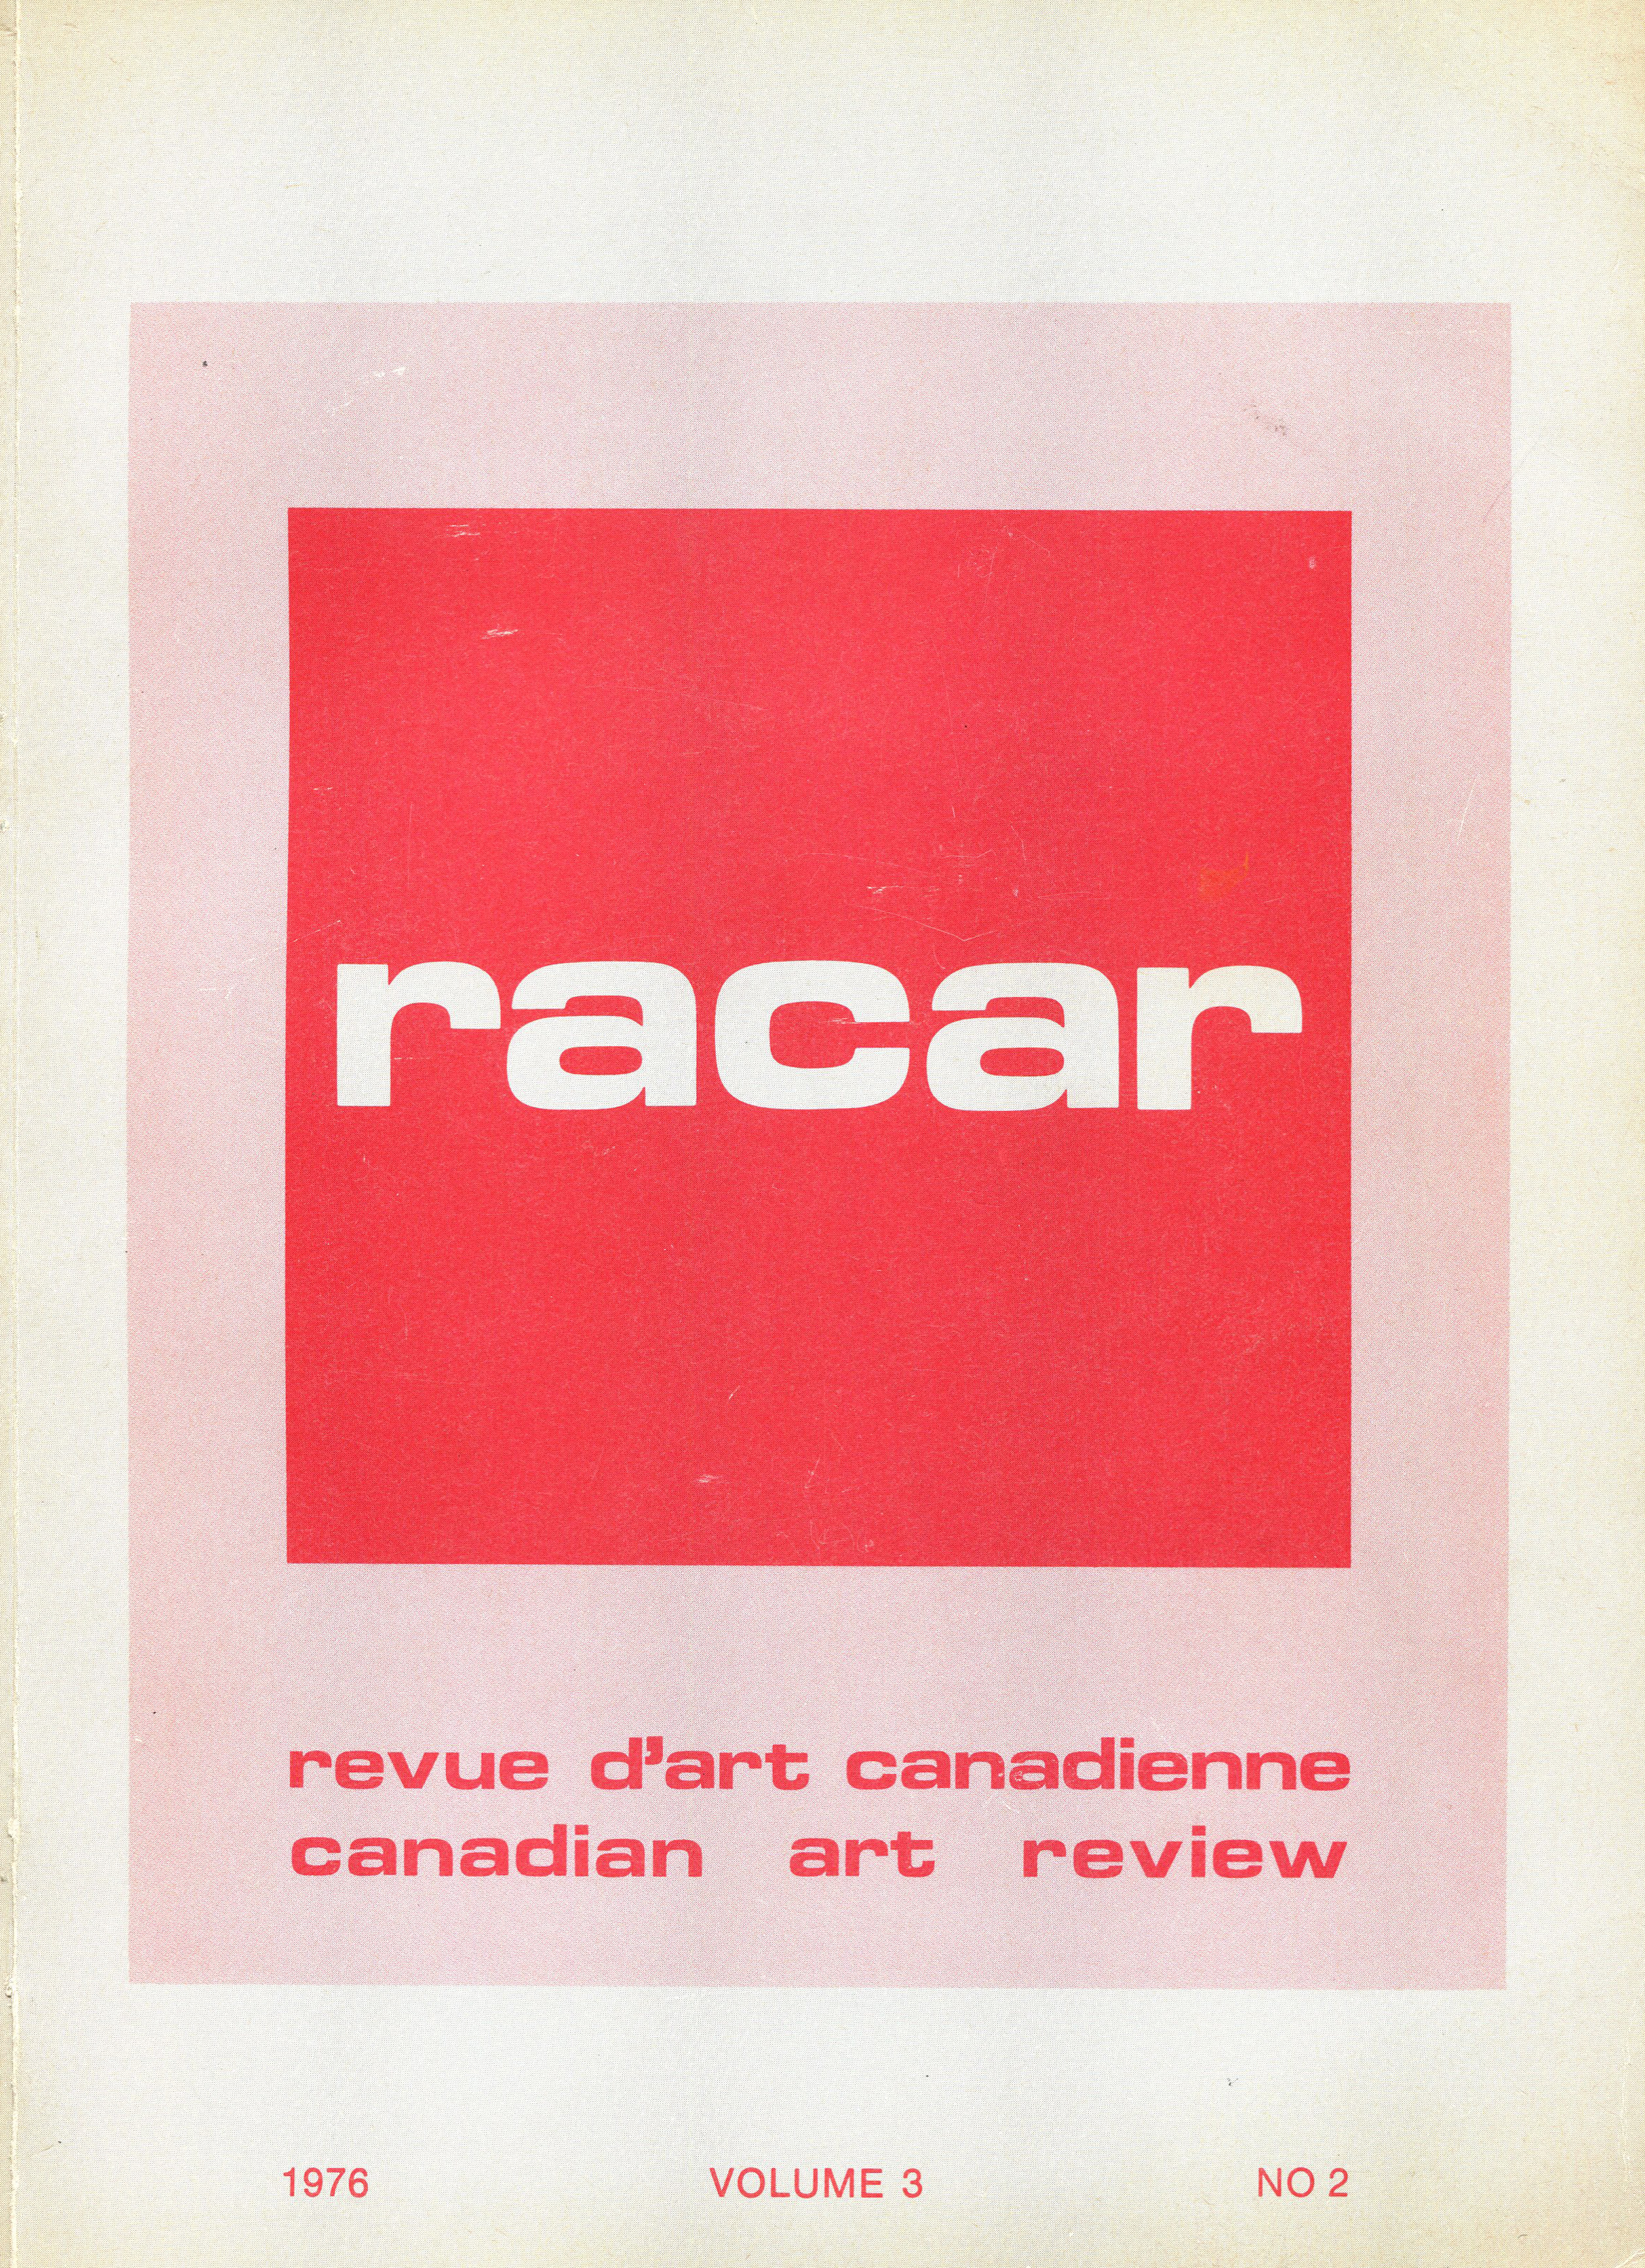 Racar 76 Cover copy